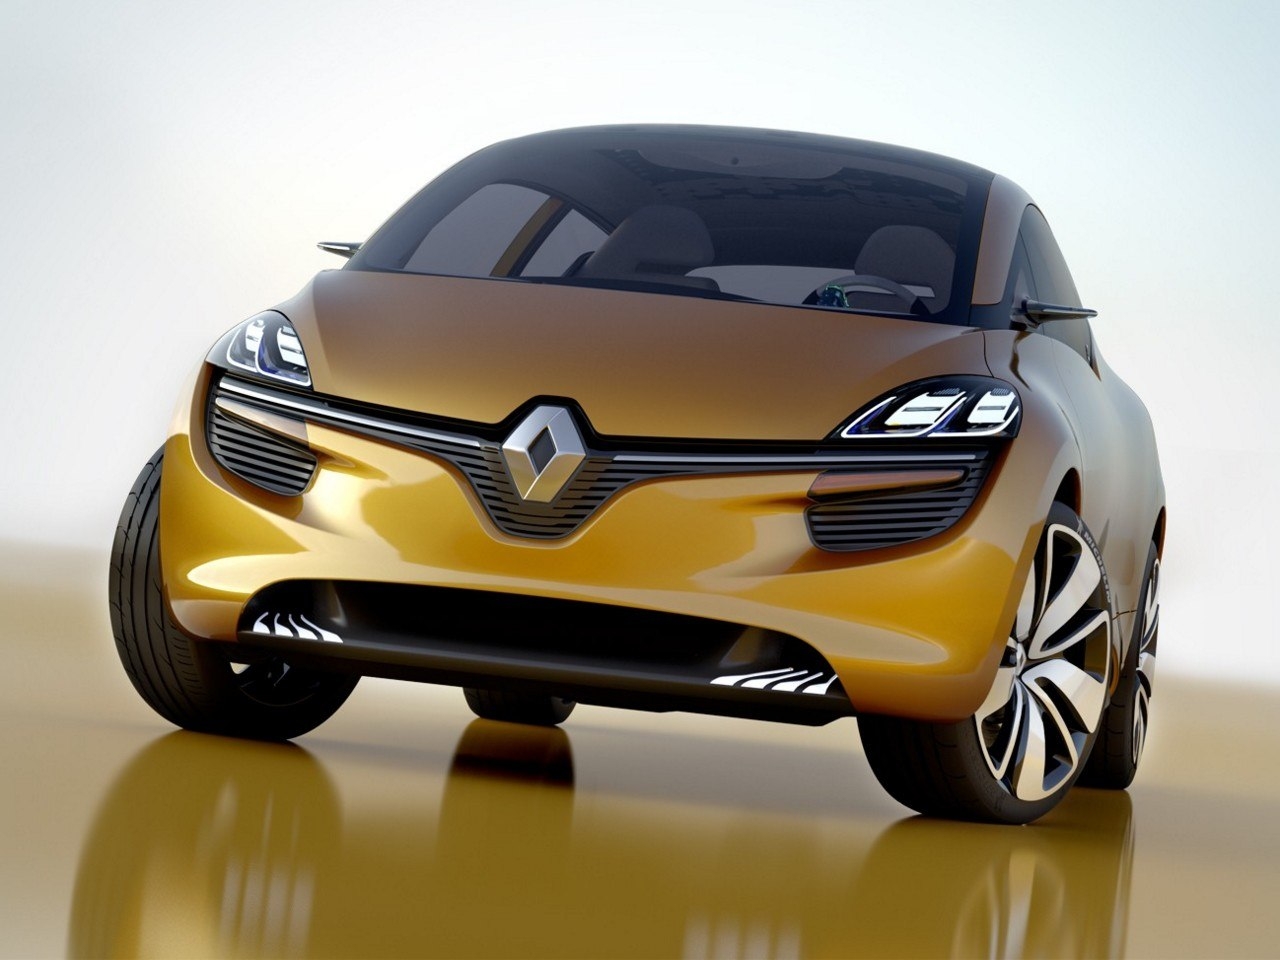 Renault Logan фото